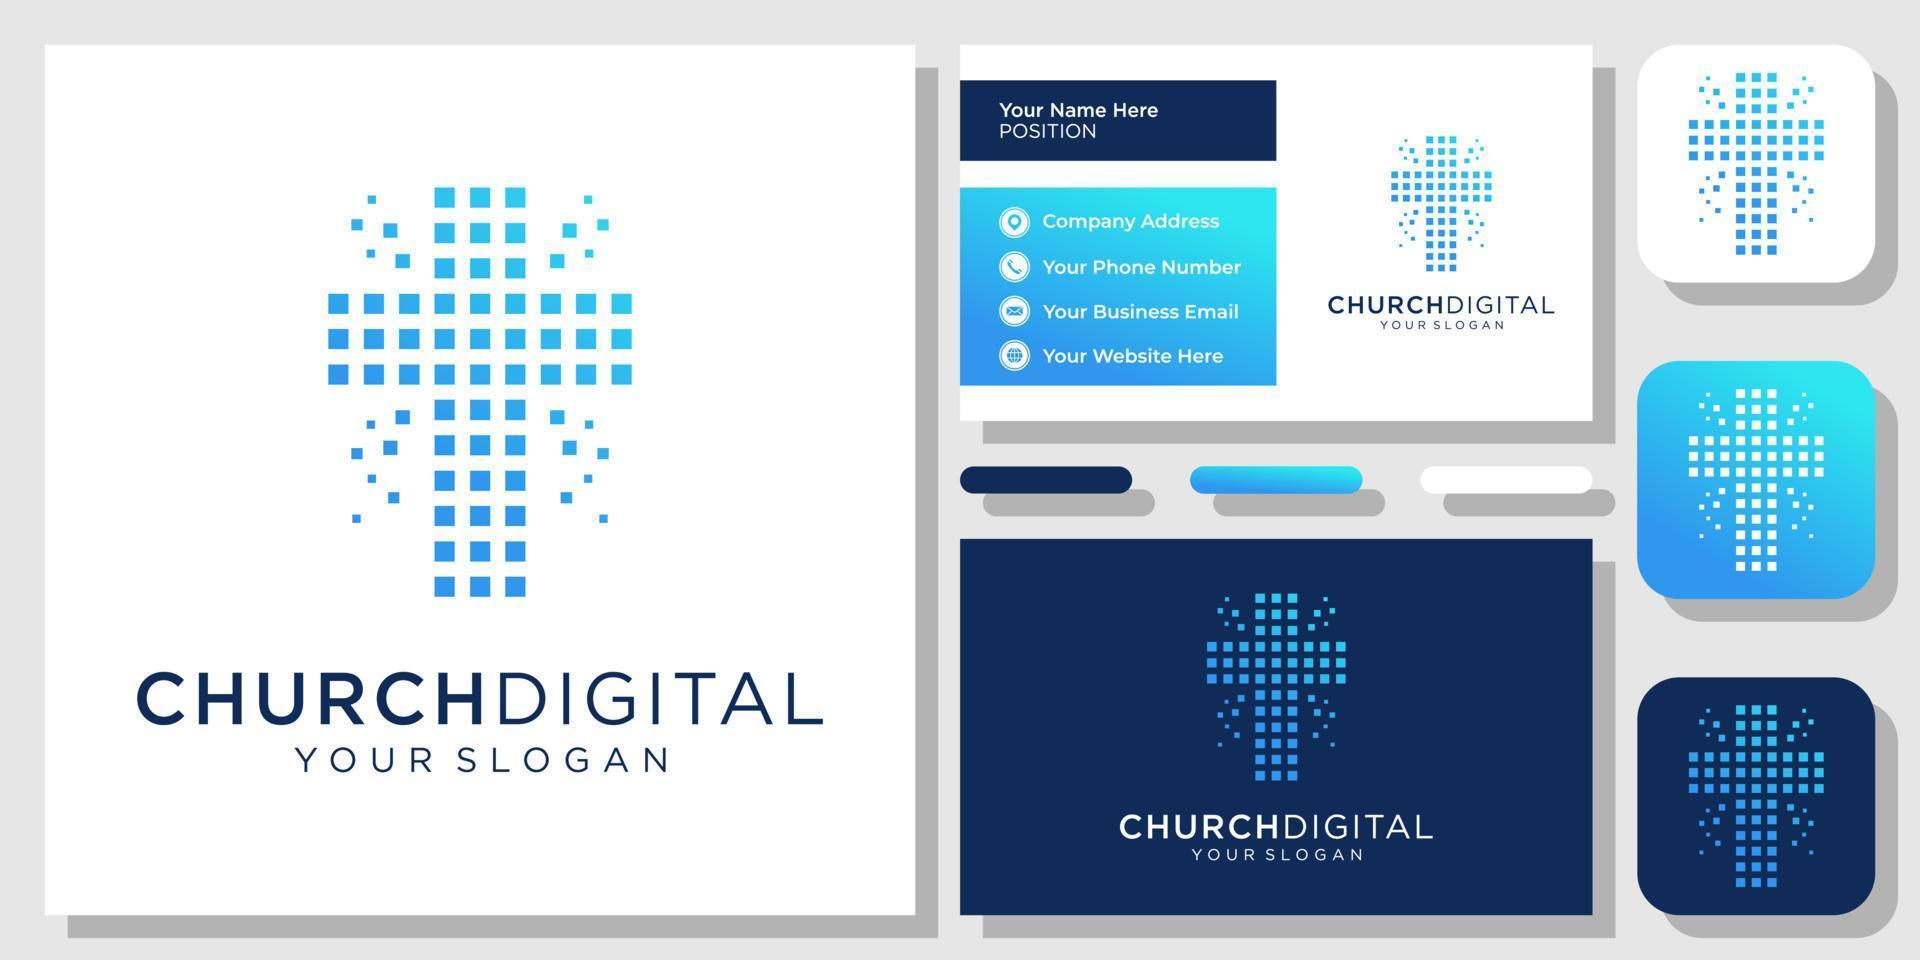 Church Digital Technology Faith Cross Network Abstract Modern Logo Design with Business Card Template vector